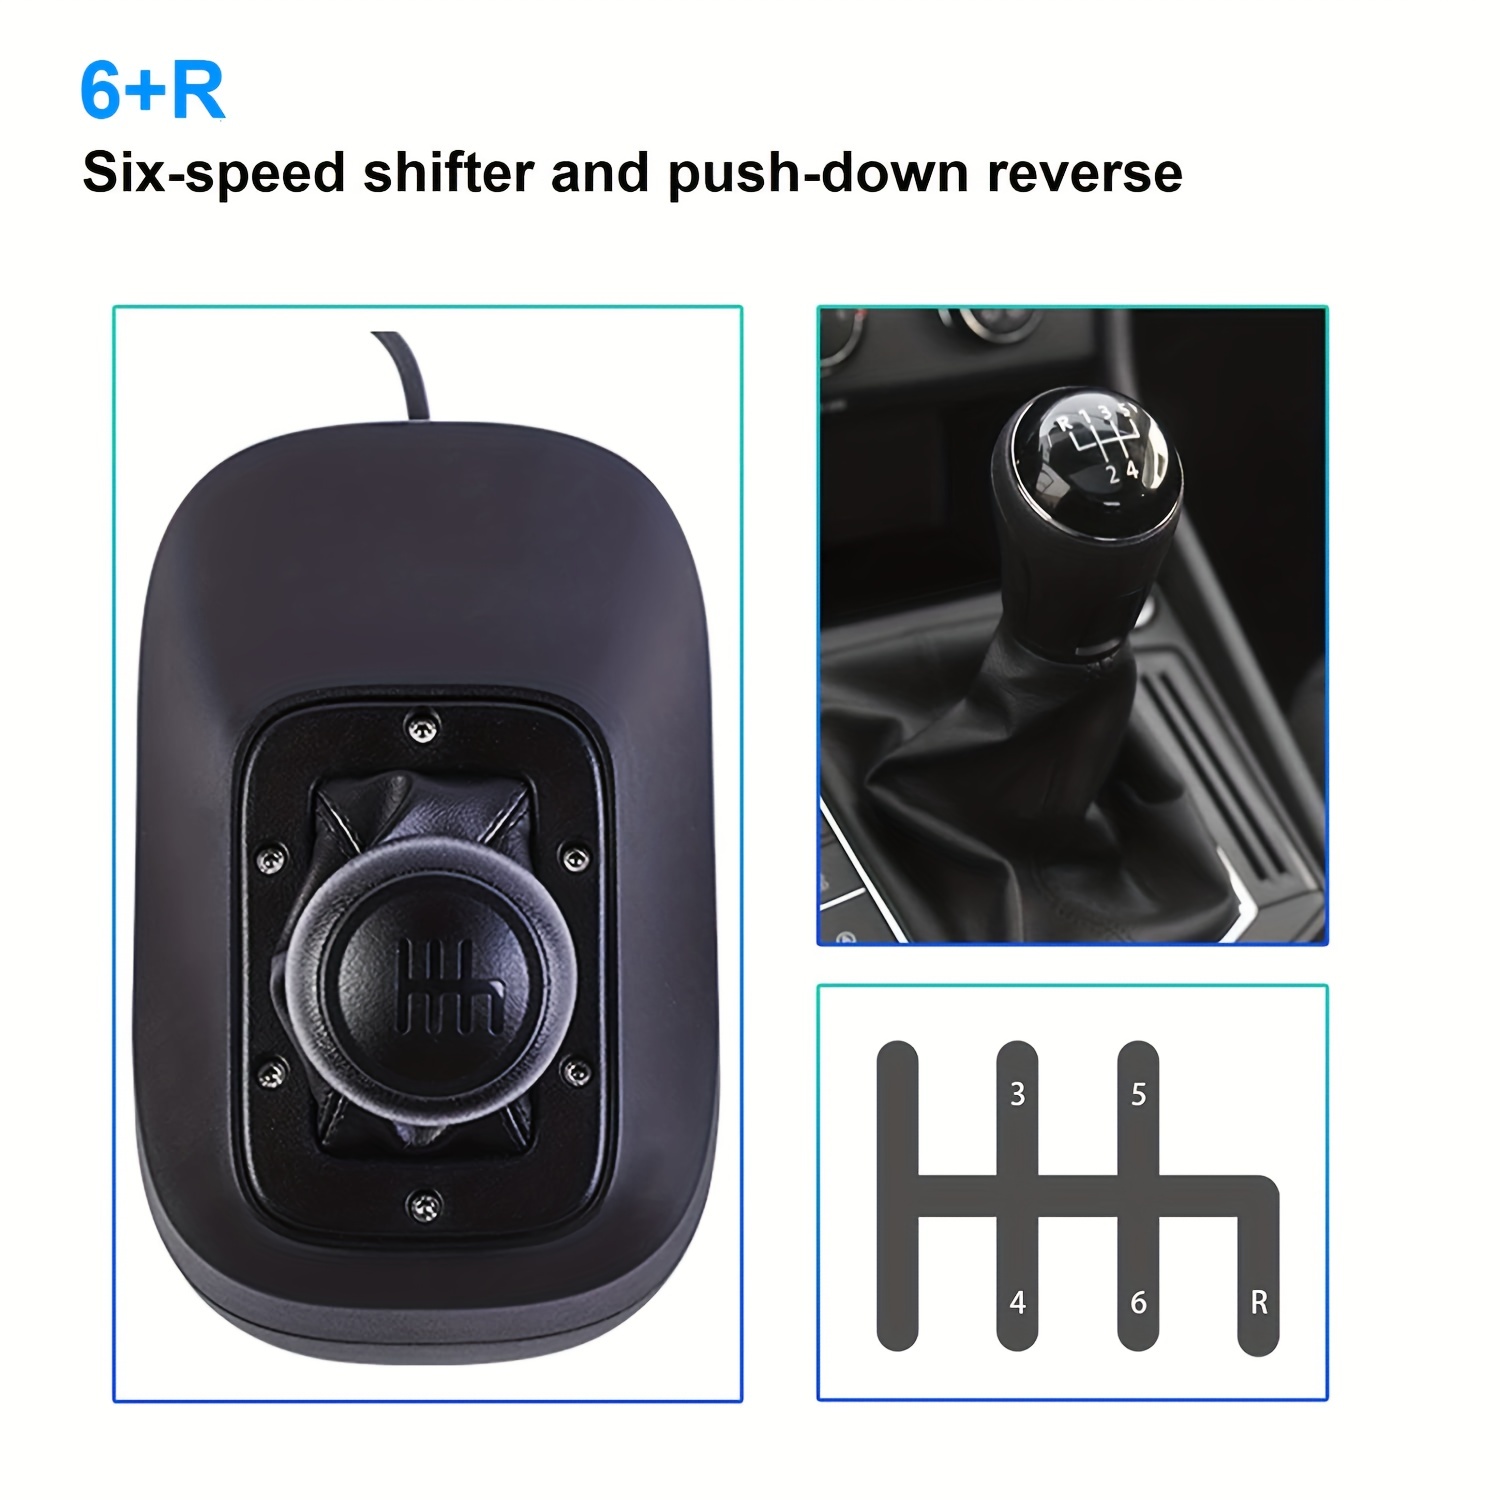 PC USB H Gears Shifter for Logitech G29/G25/G27/G920 T300RS/GT Steering  Wheel /